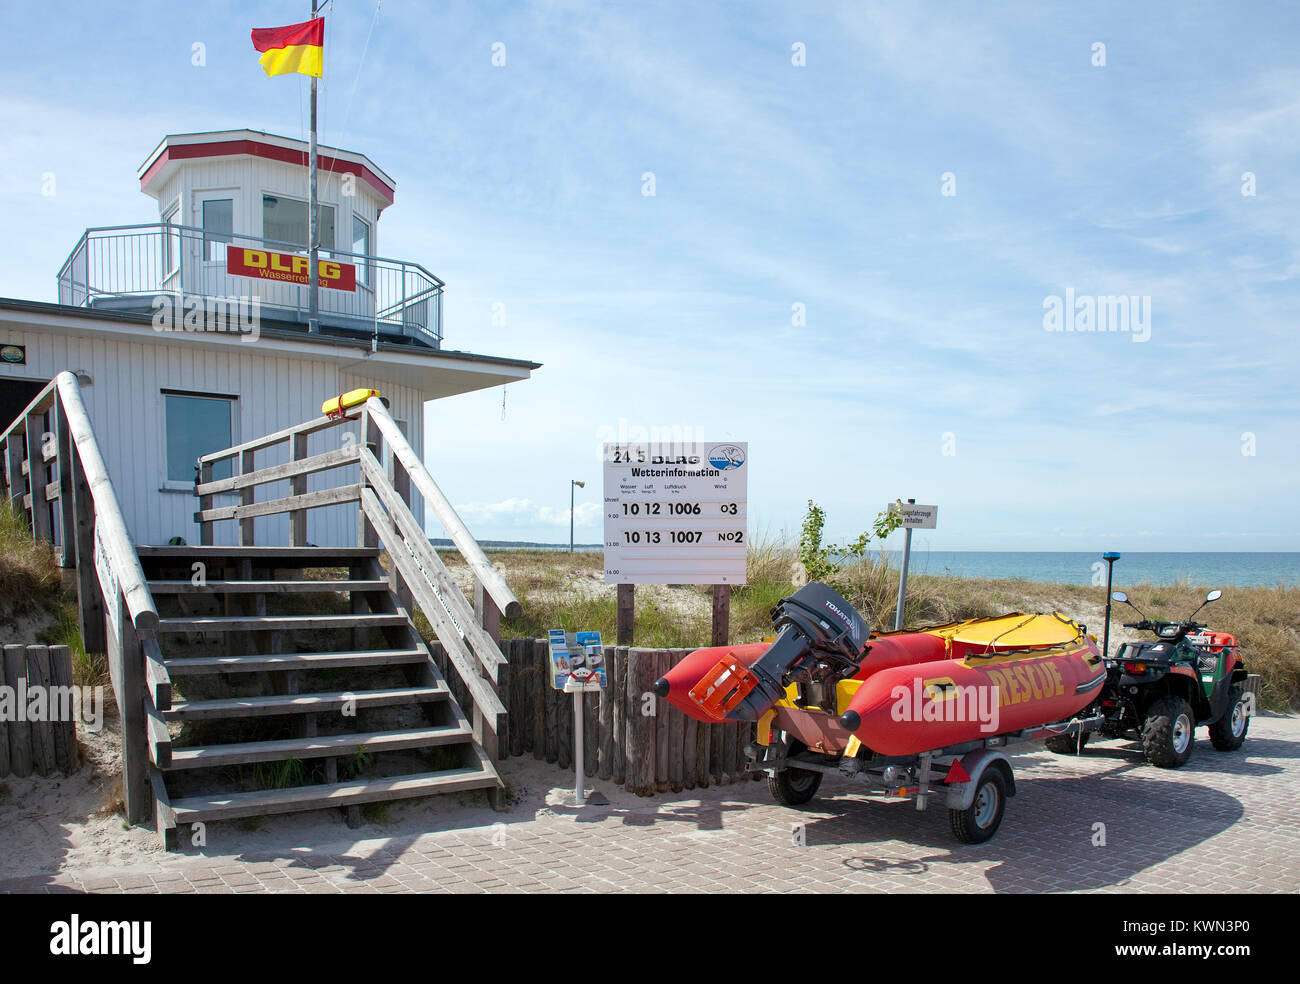 DLRG German Lifeguard Association at the beach of Prerow, Fishland, Mecklenburg-Western Pomerania, Baltic sea, Germany, Europe Stock Photo